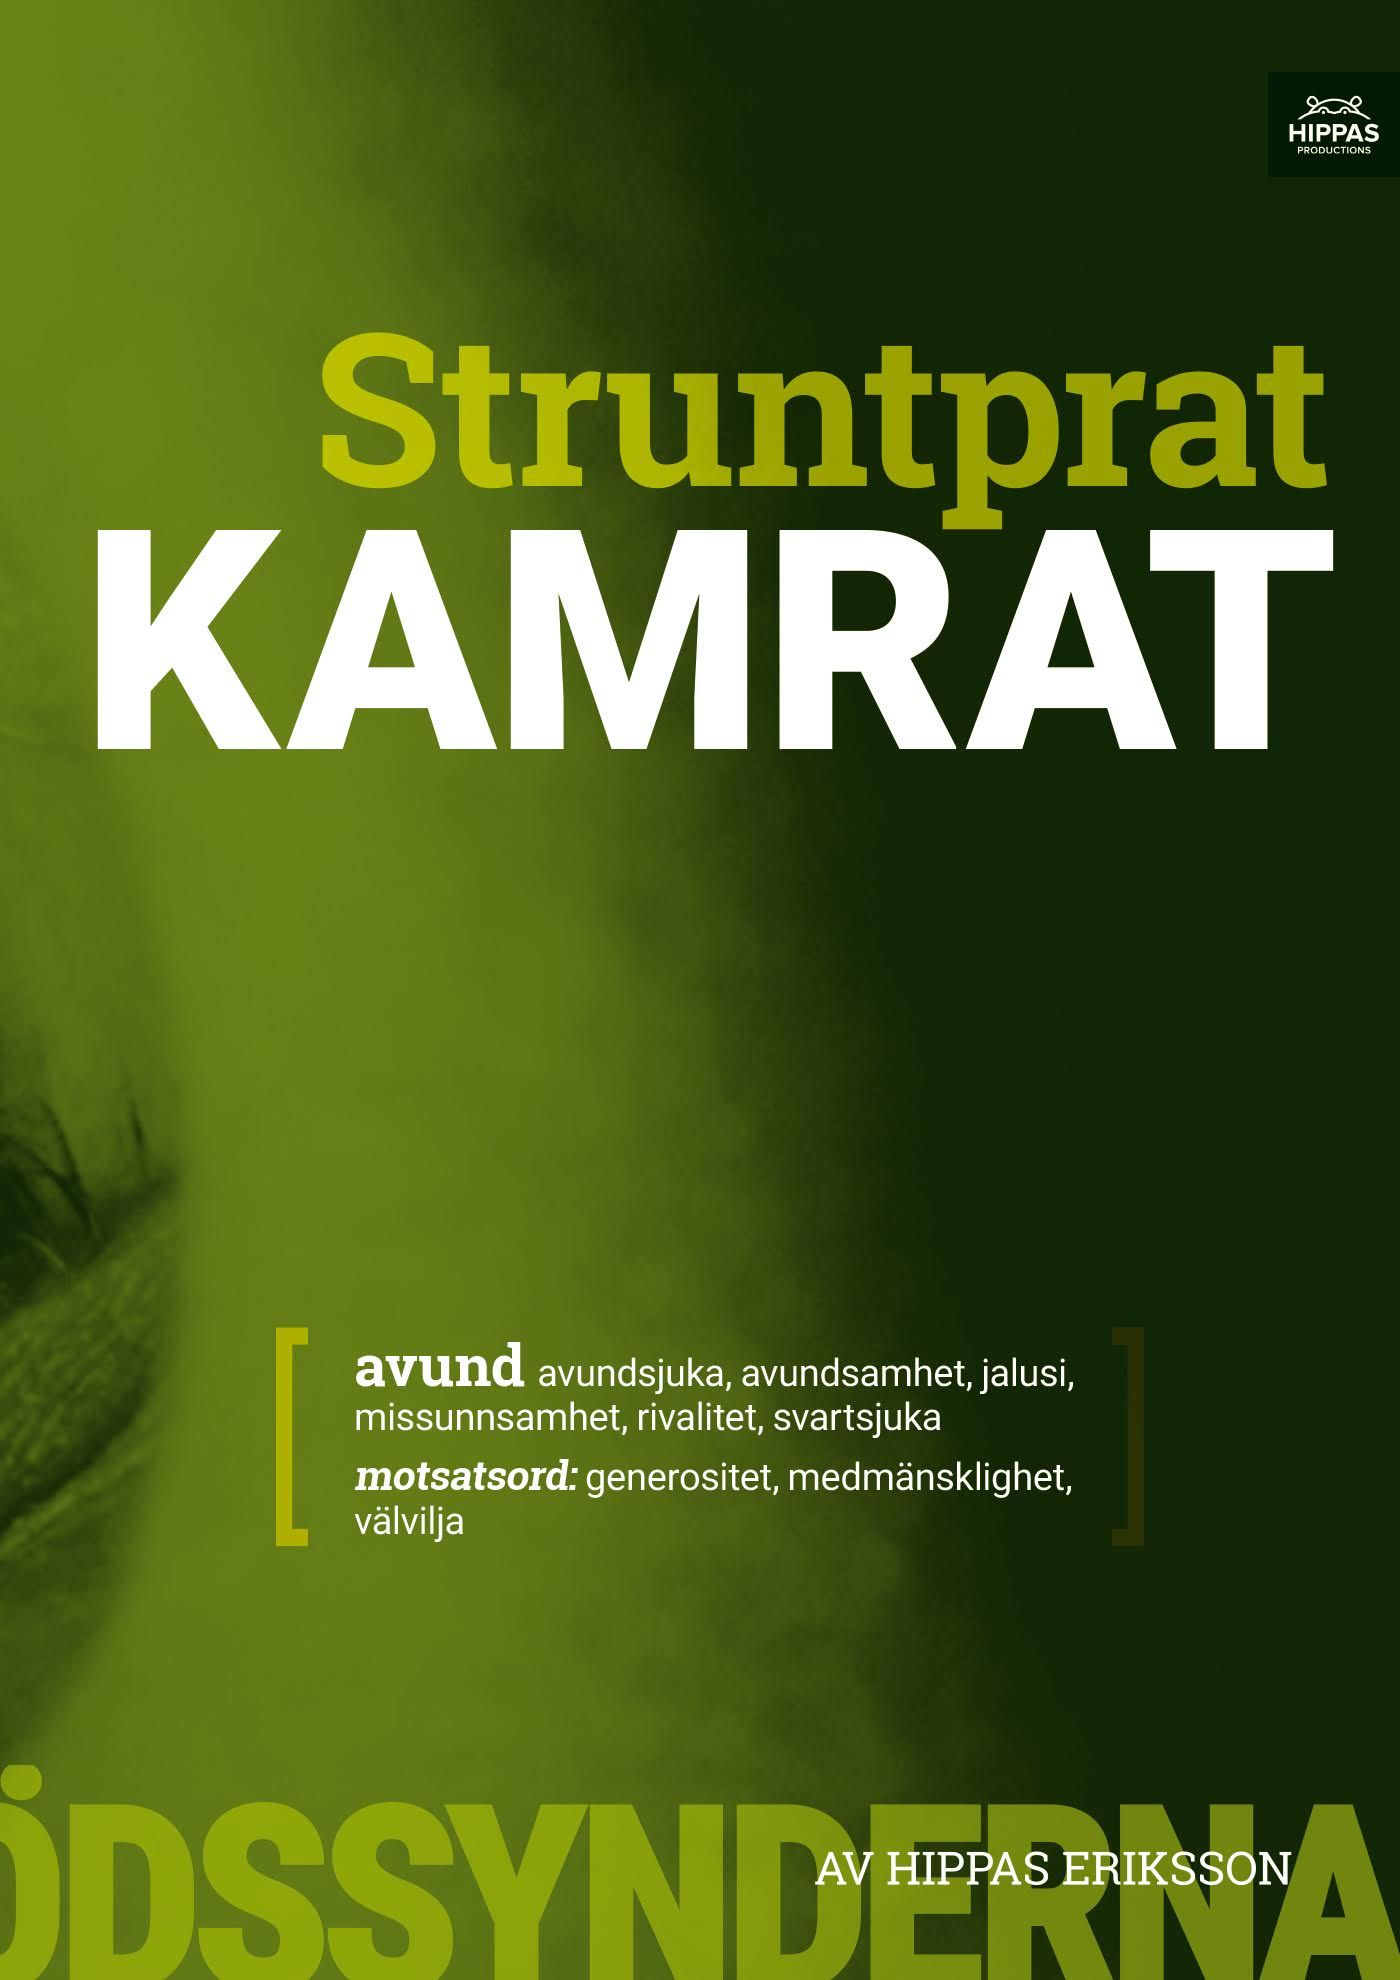 Struntprat kamrat, audiobook by Hippas Eriksson